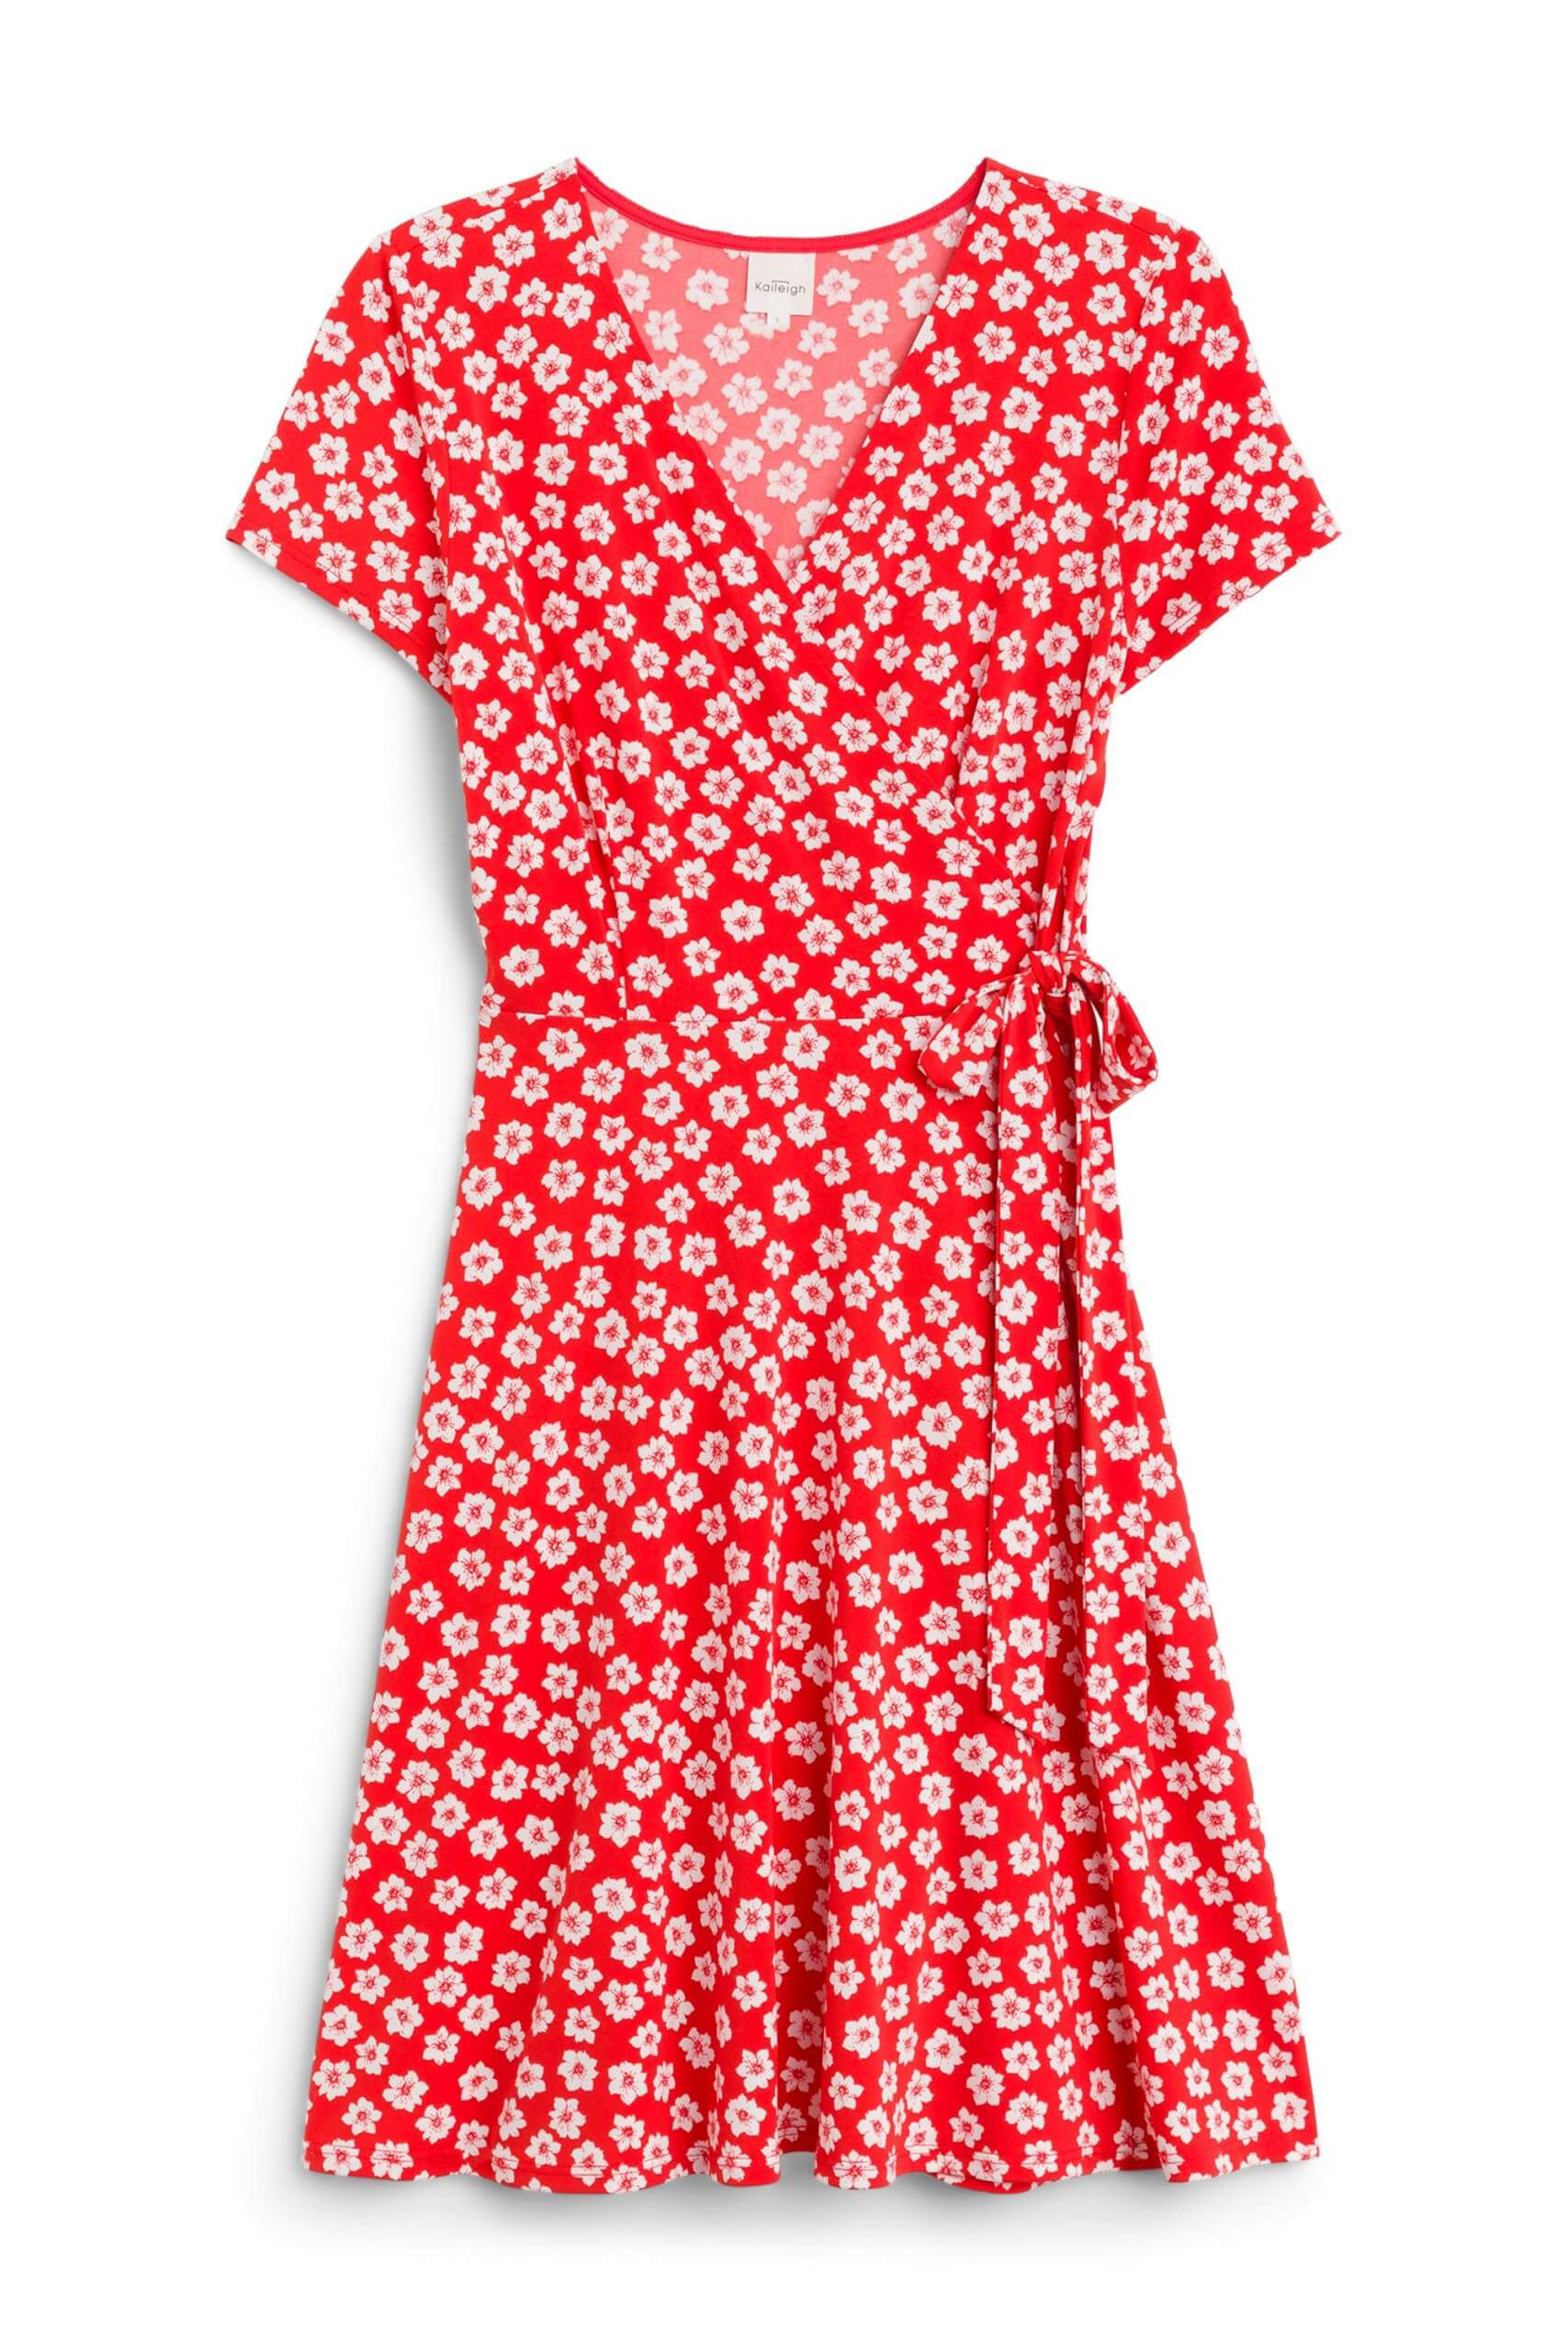 Stitch Fix Women's red floral wrap dress.